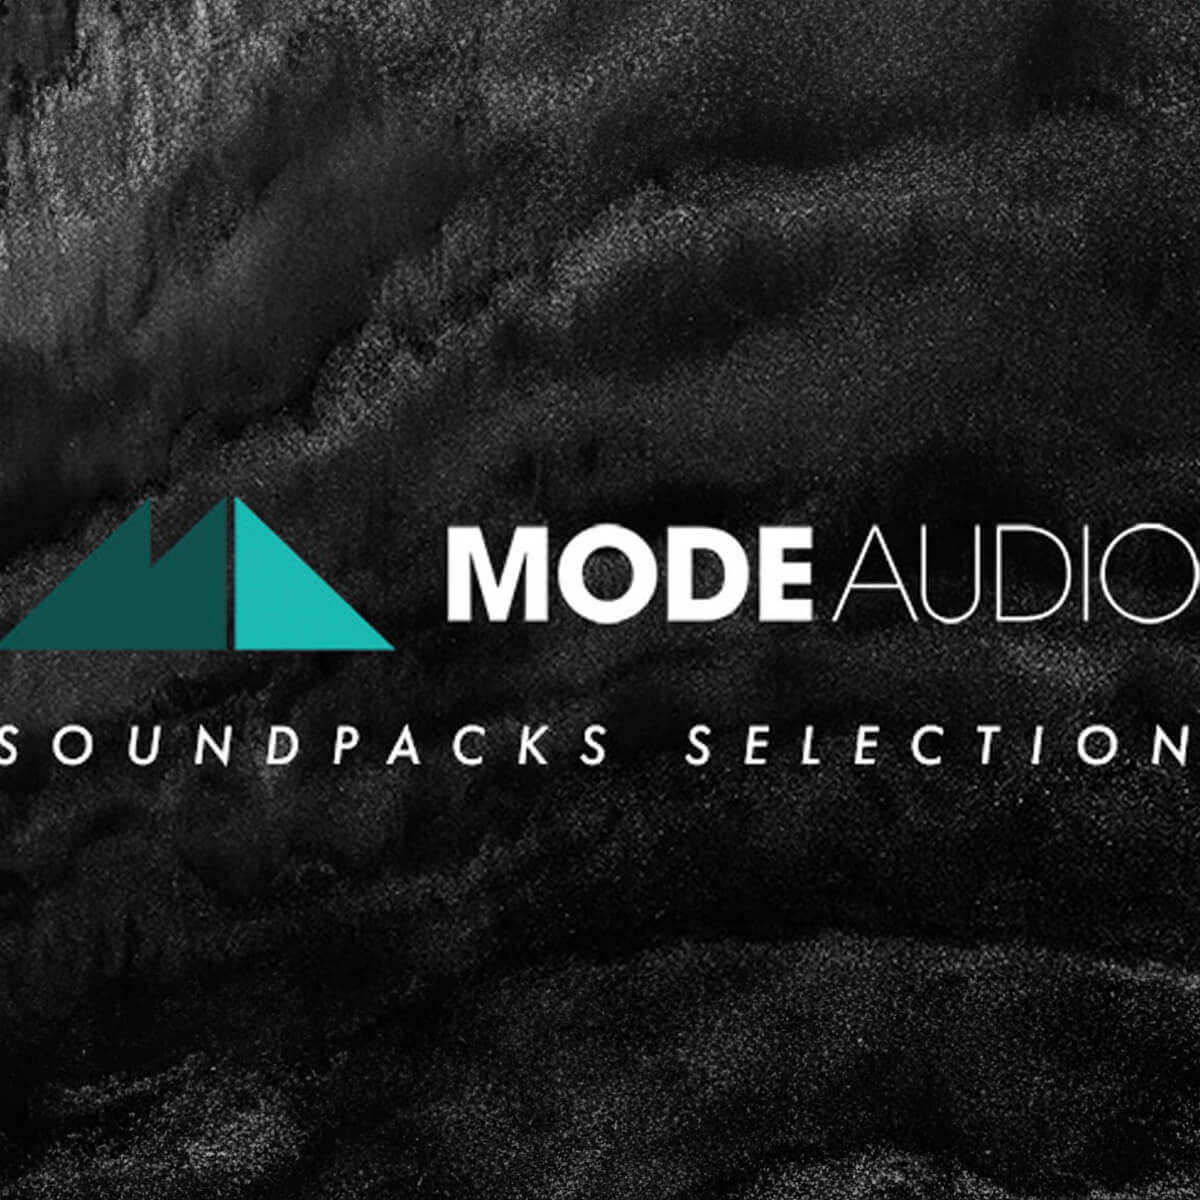 ModeAudio Soundpacks Selection